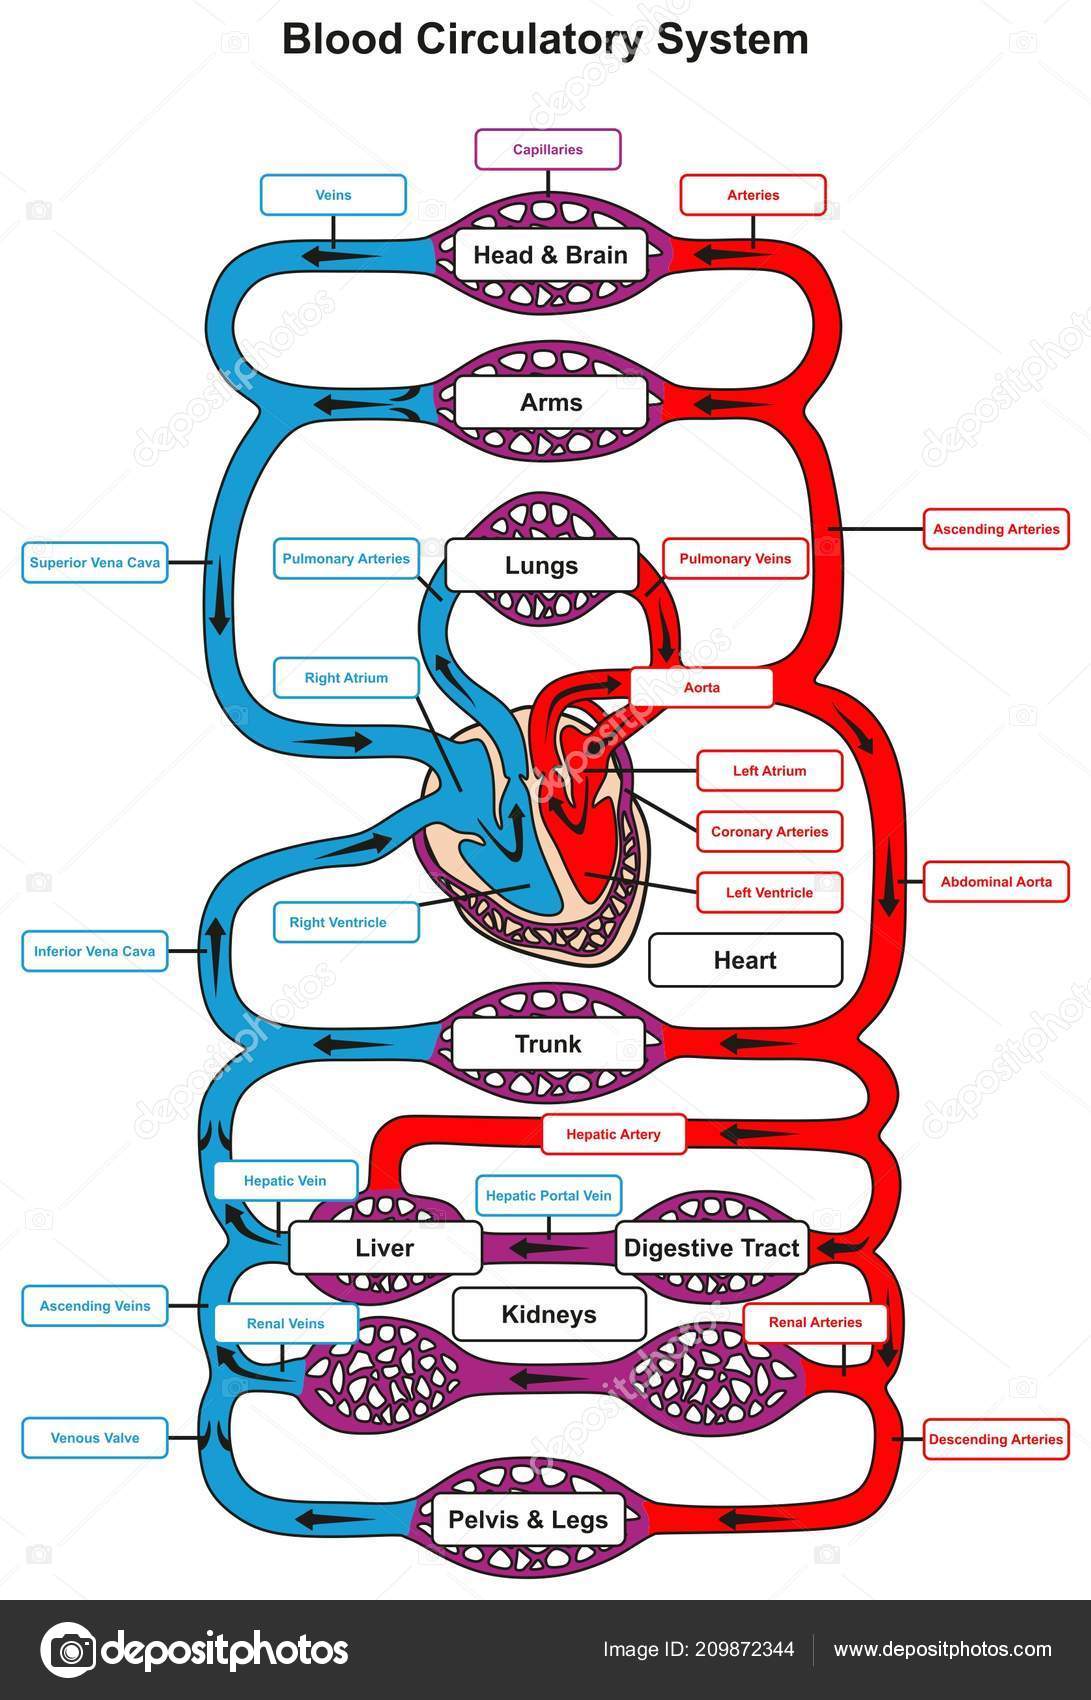 Human body vein diagram | Blood Circulatory System Human ...